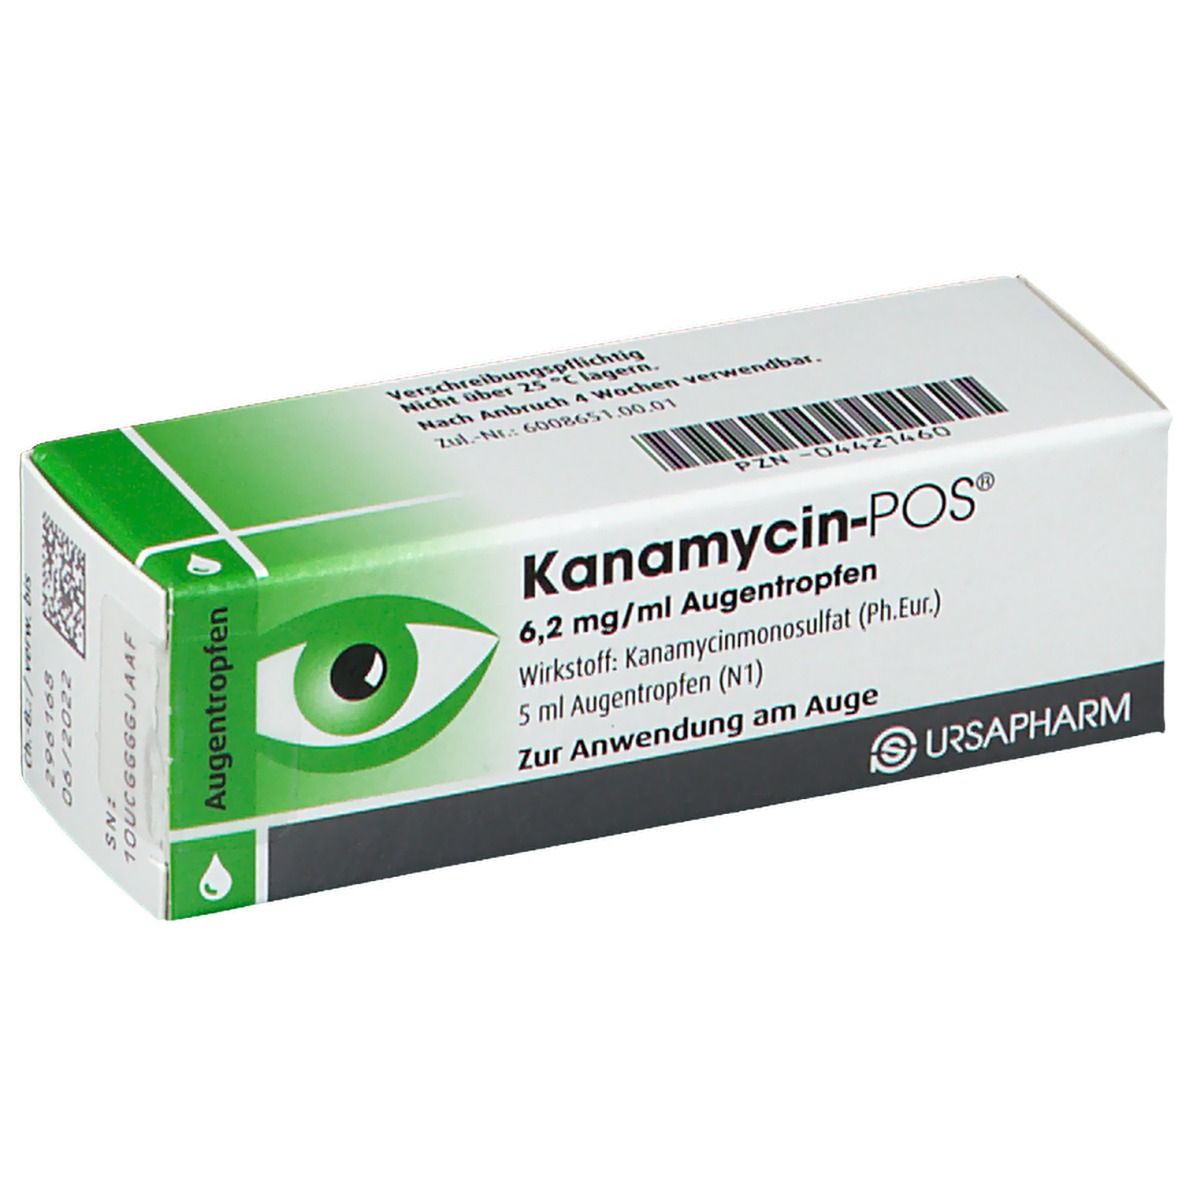 Kanamycin-POS Augentropfen